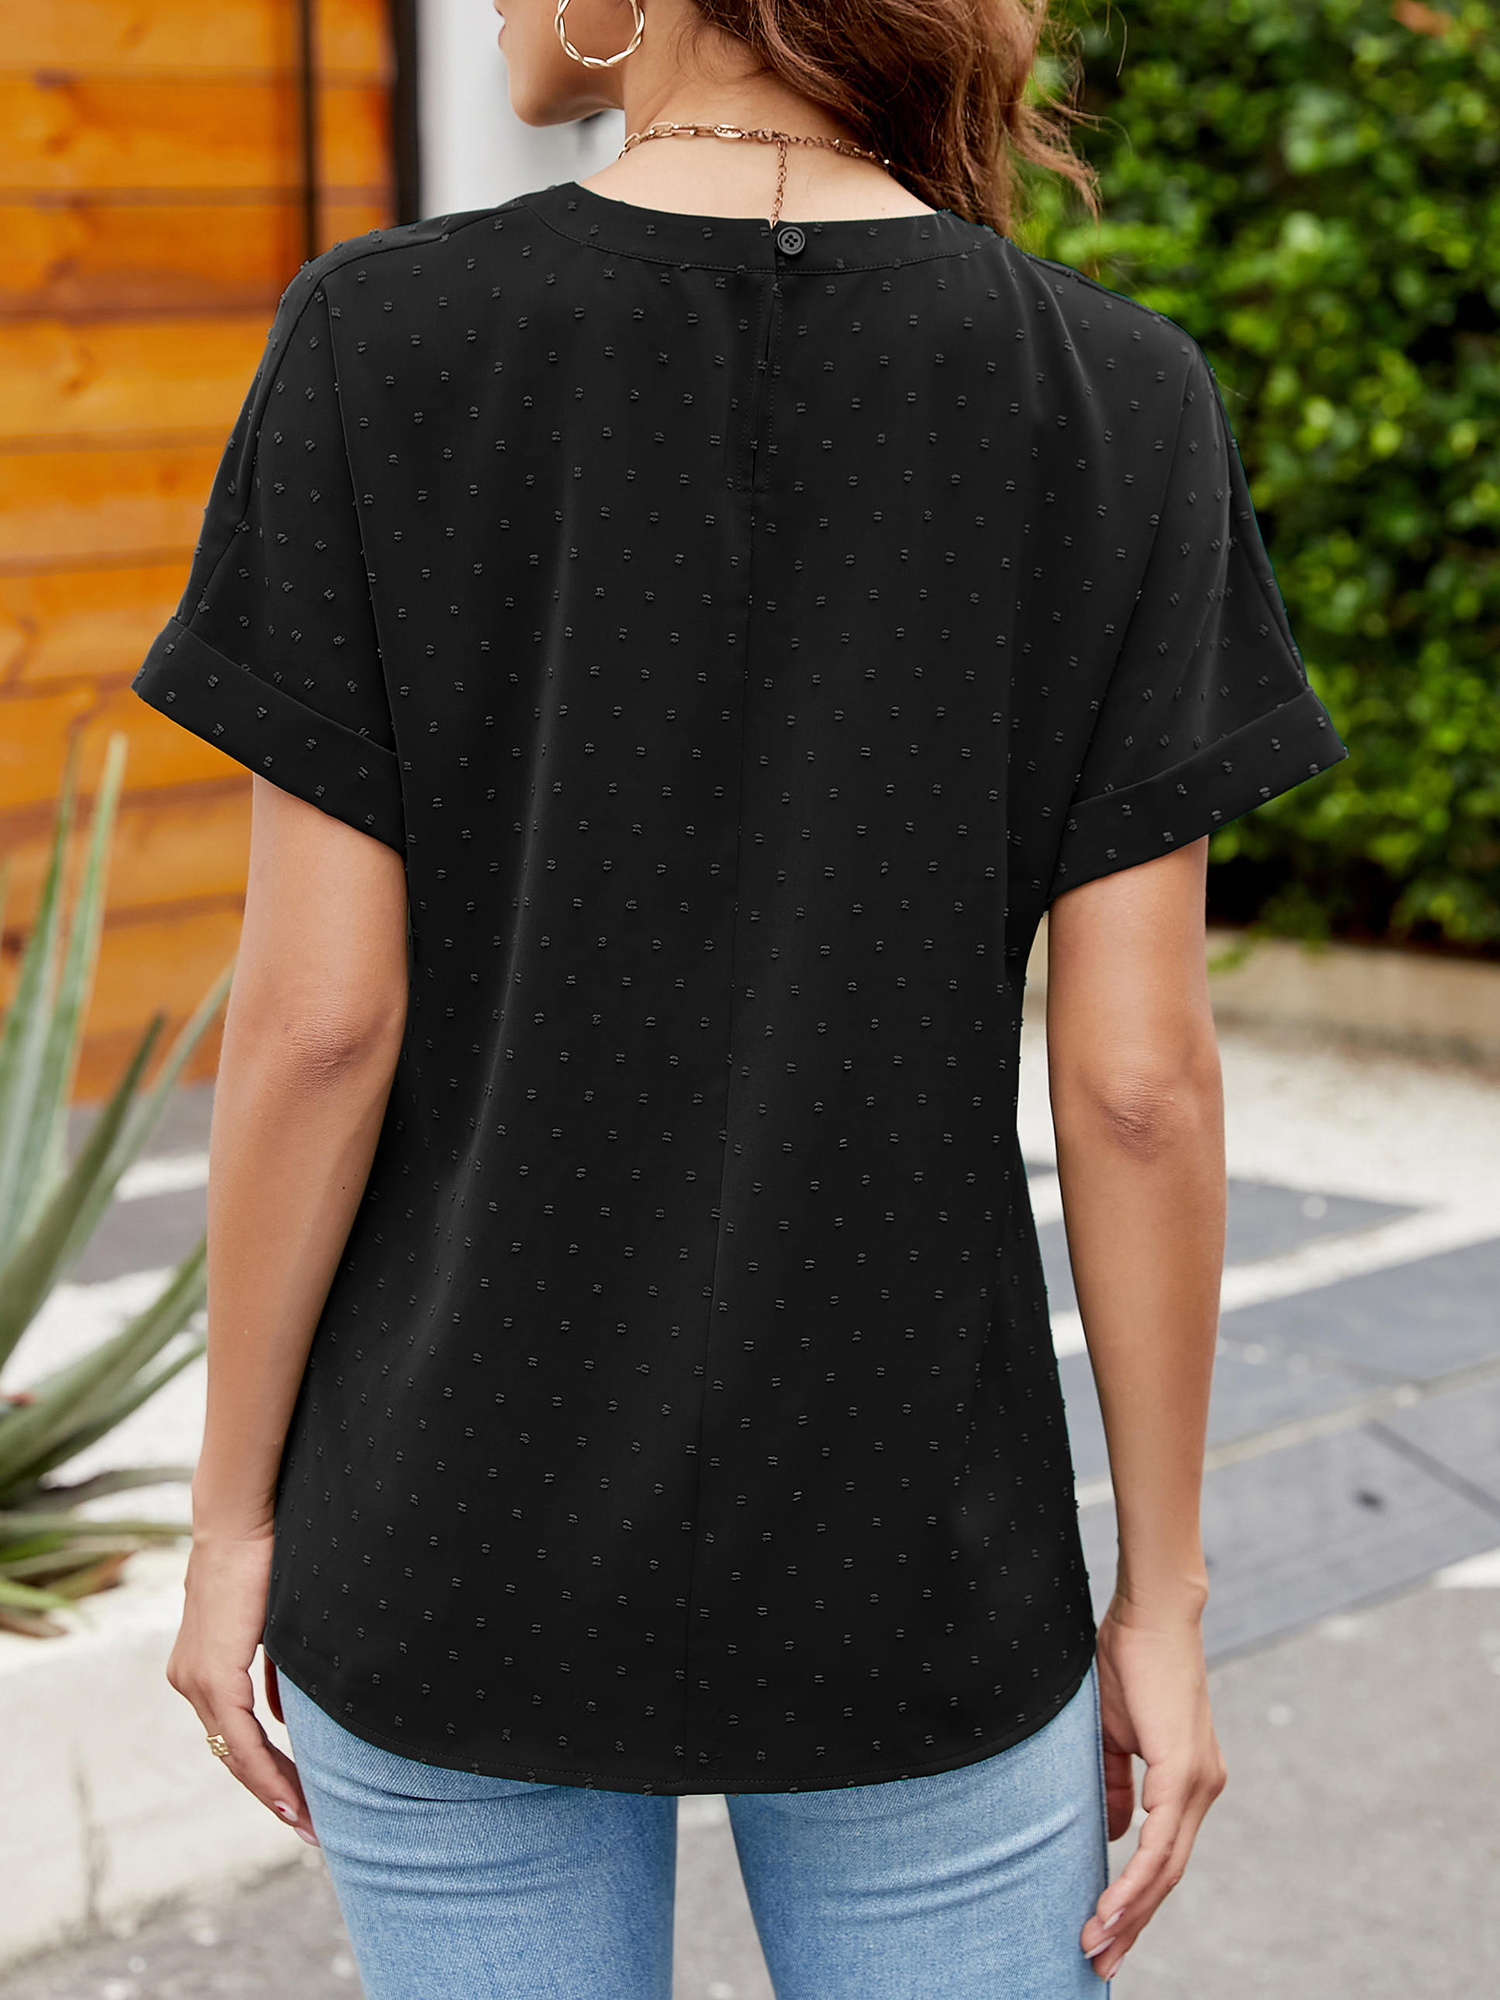 Amoretu Swiss Dot Tops for Womens Summer Crewneck Roll Up Short Sleeve Tunic Shirts Casual Work Office Blouse Shirt Black XL - image 2 of 5